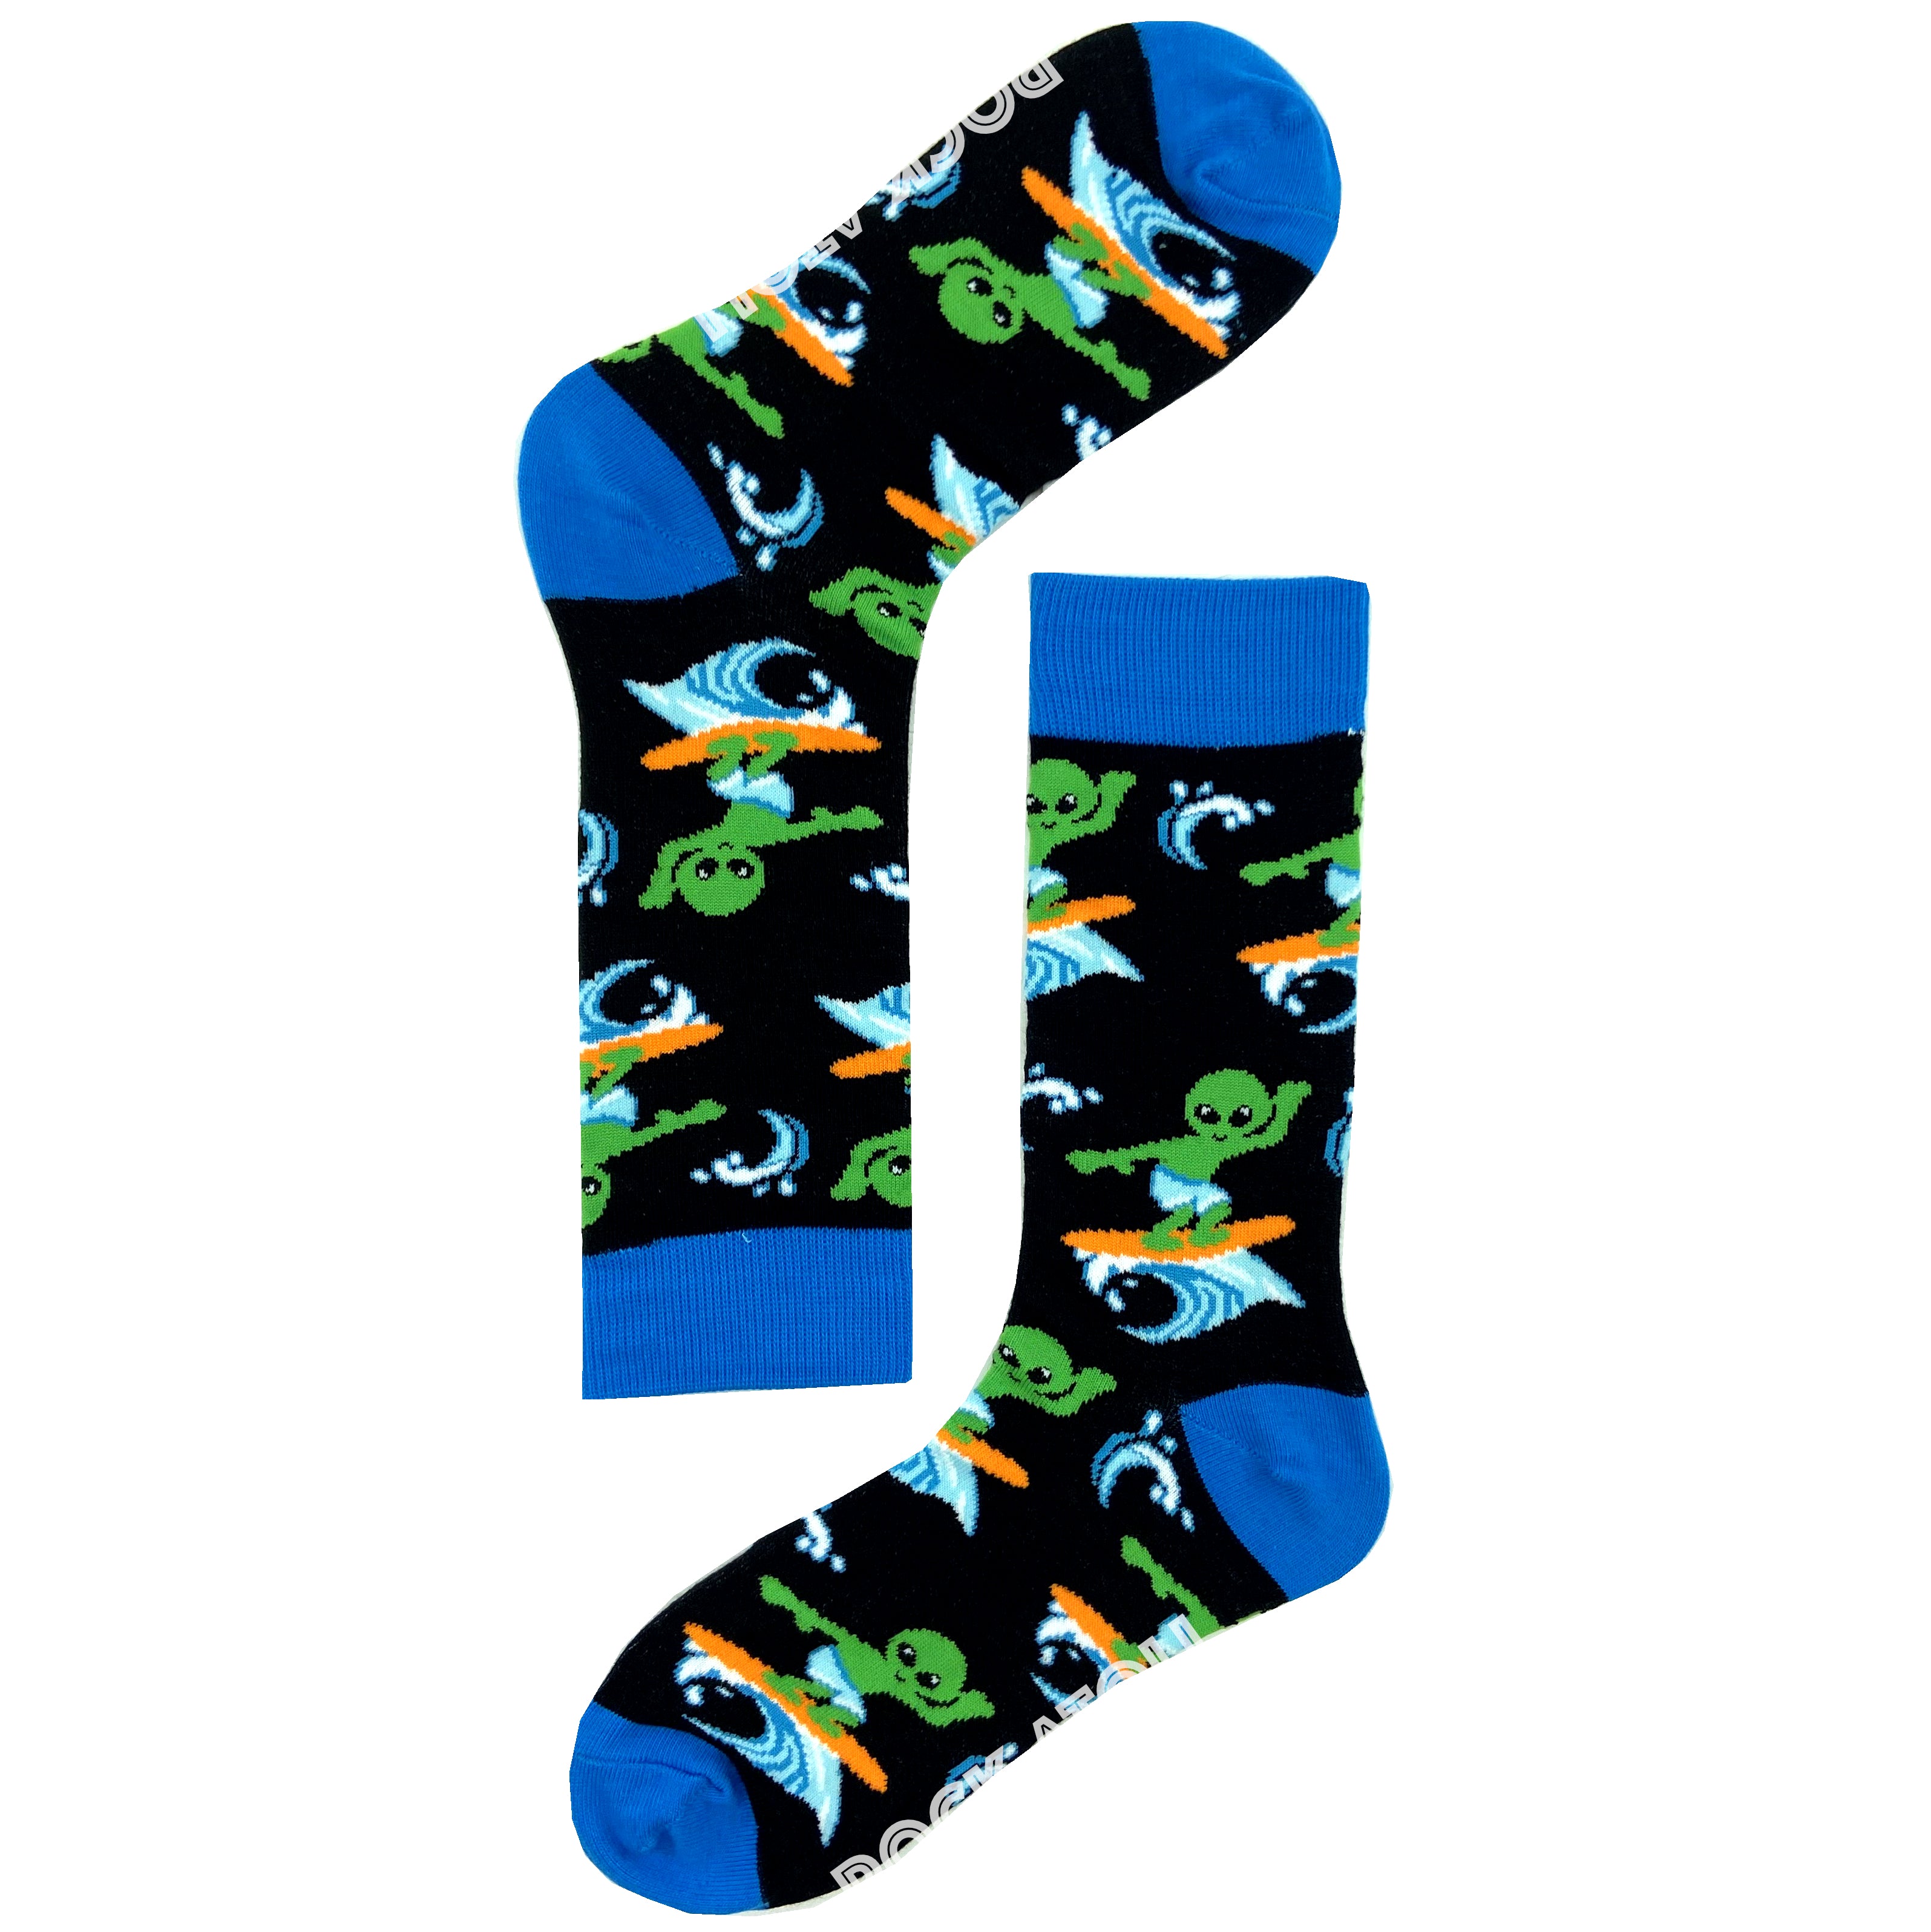 Unisex Black Alien Surfing Patterned Unusual Funky Black Novelty Socks